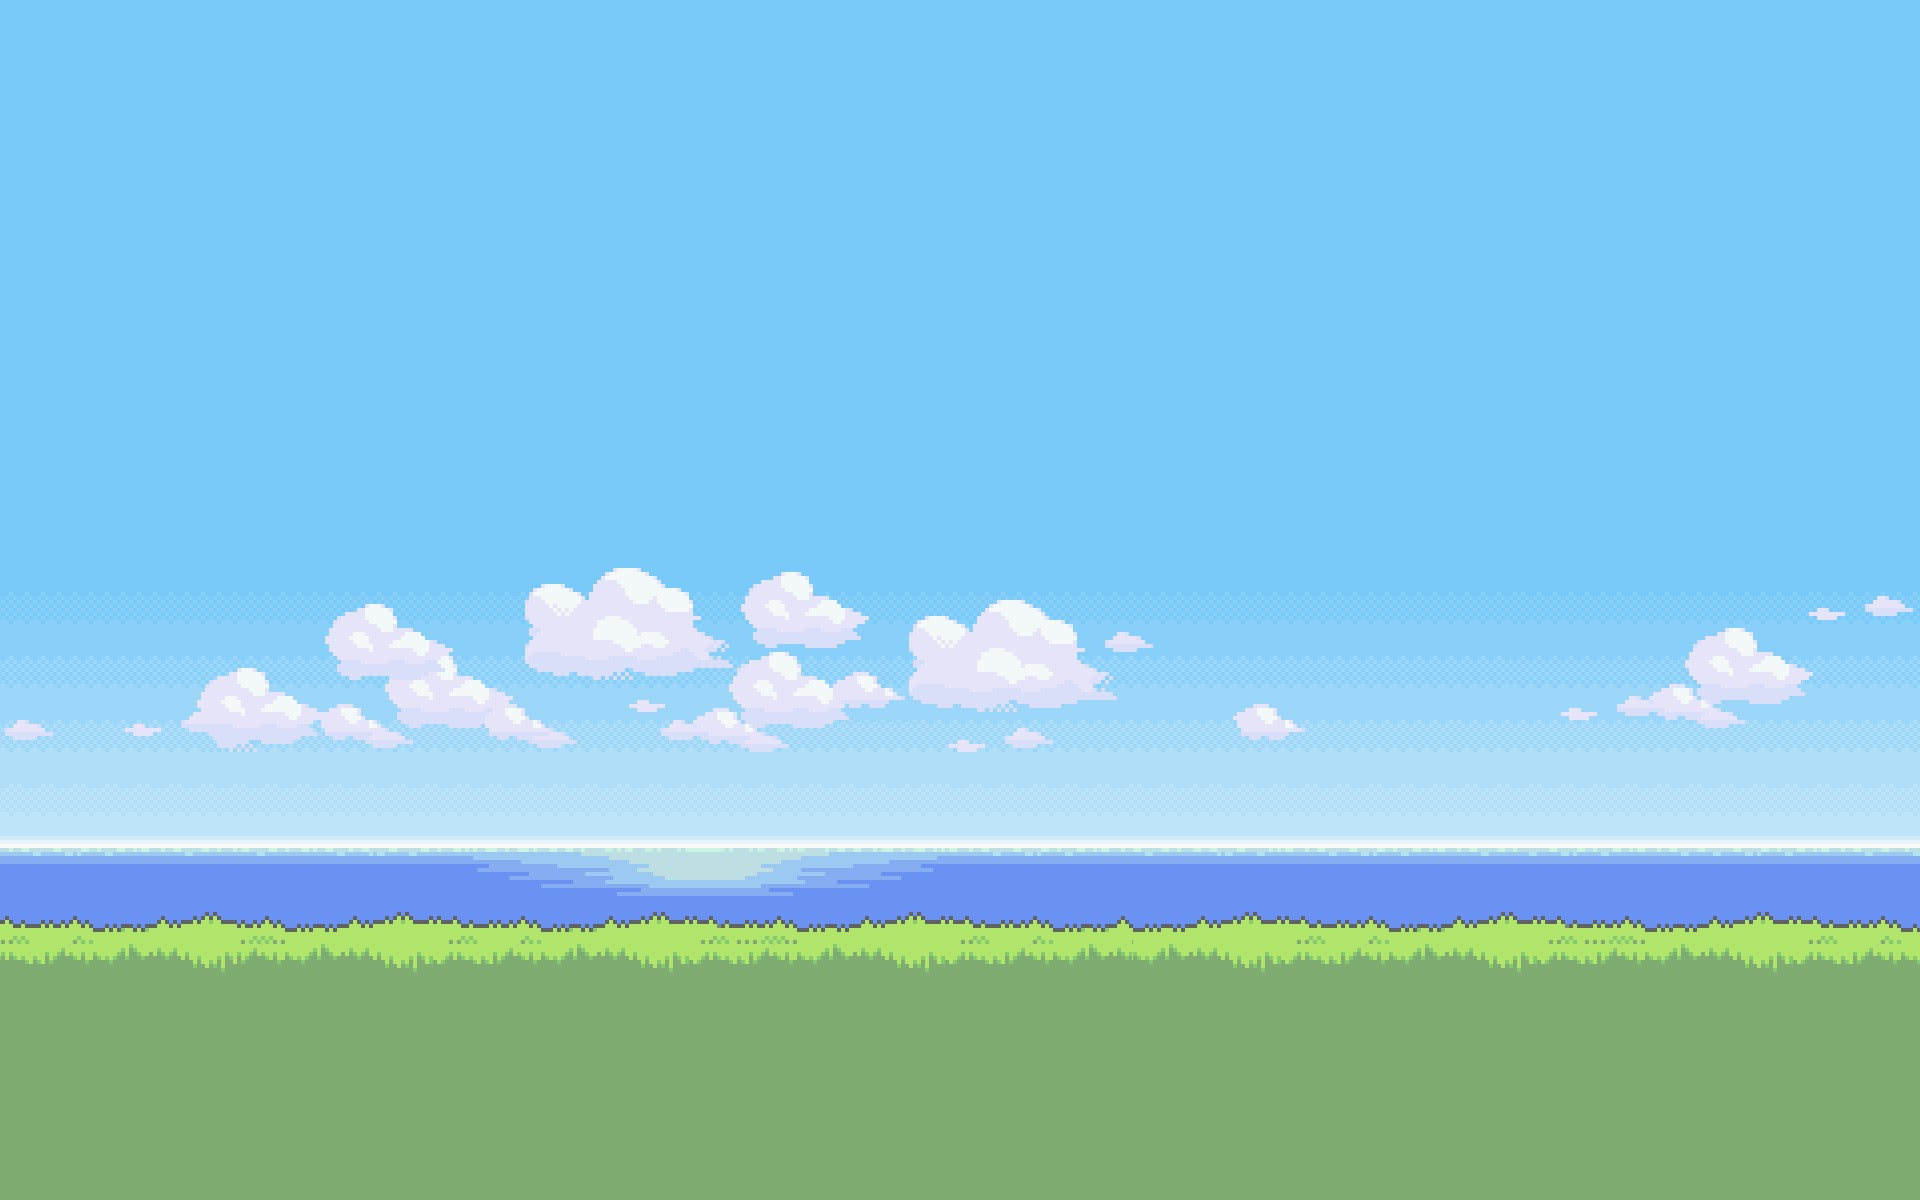 8-Bit Pixel Background